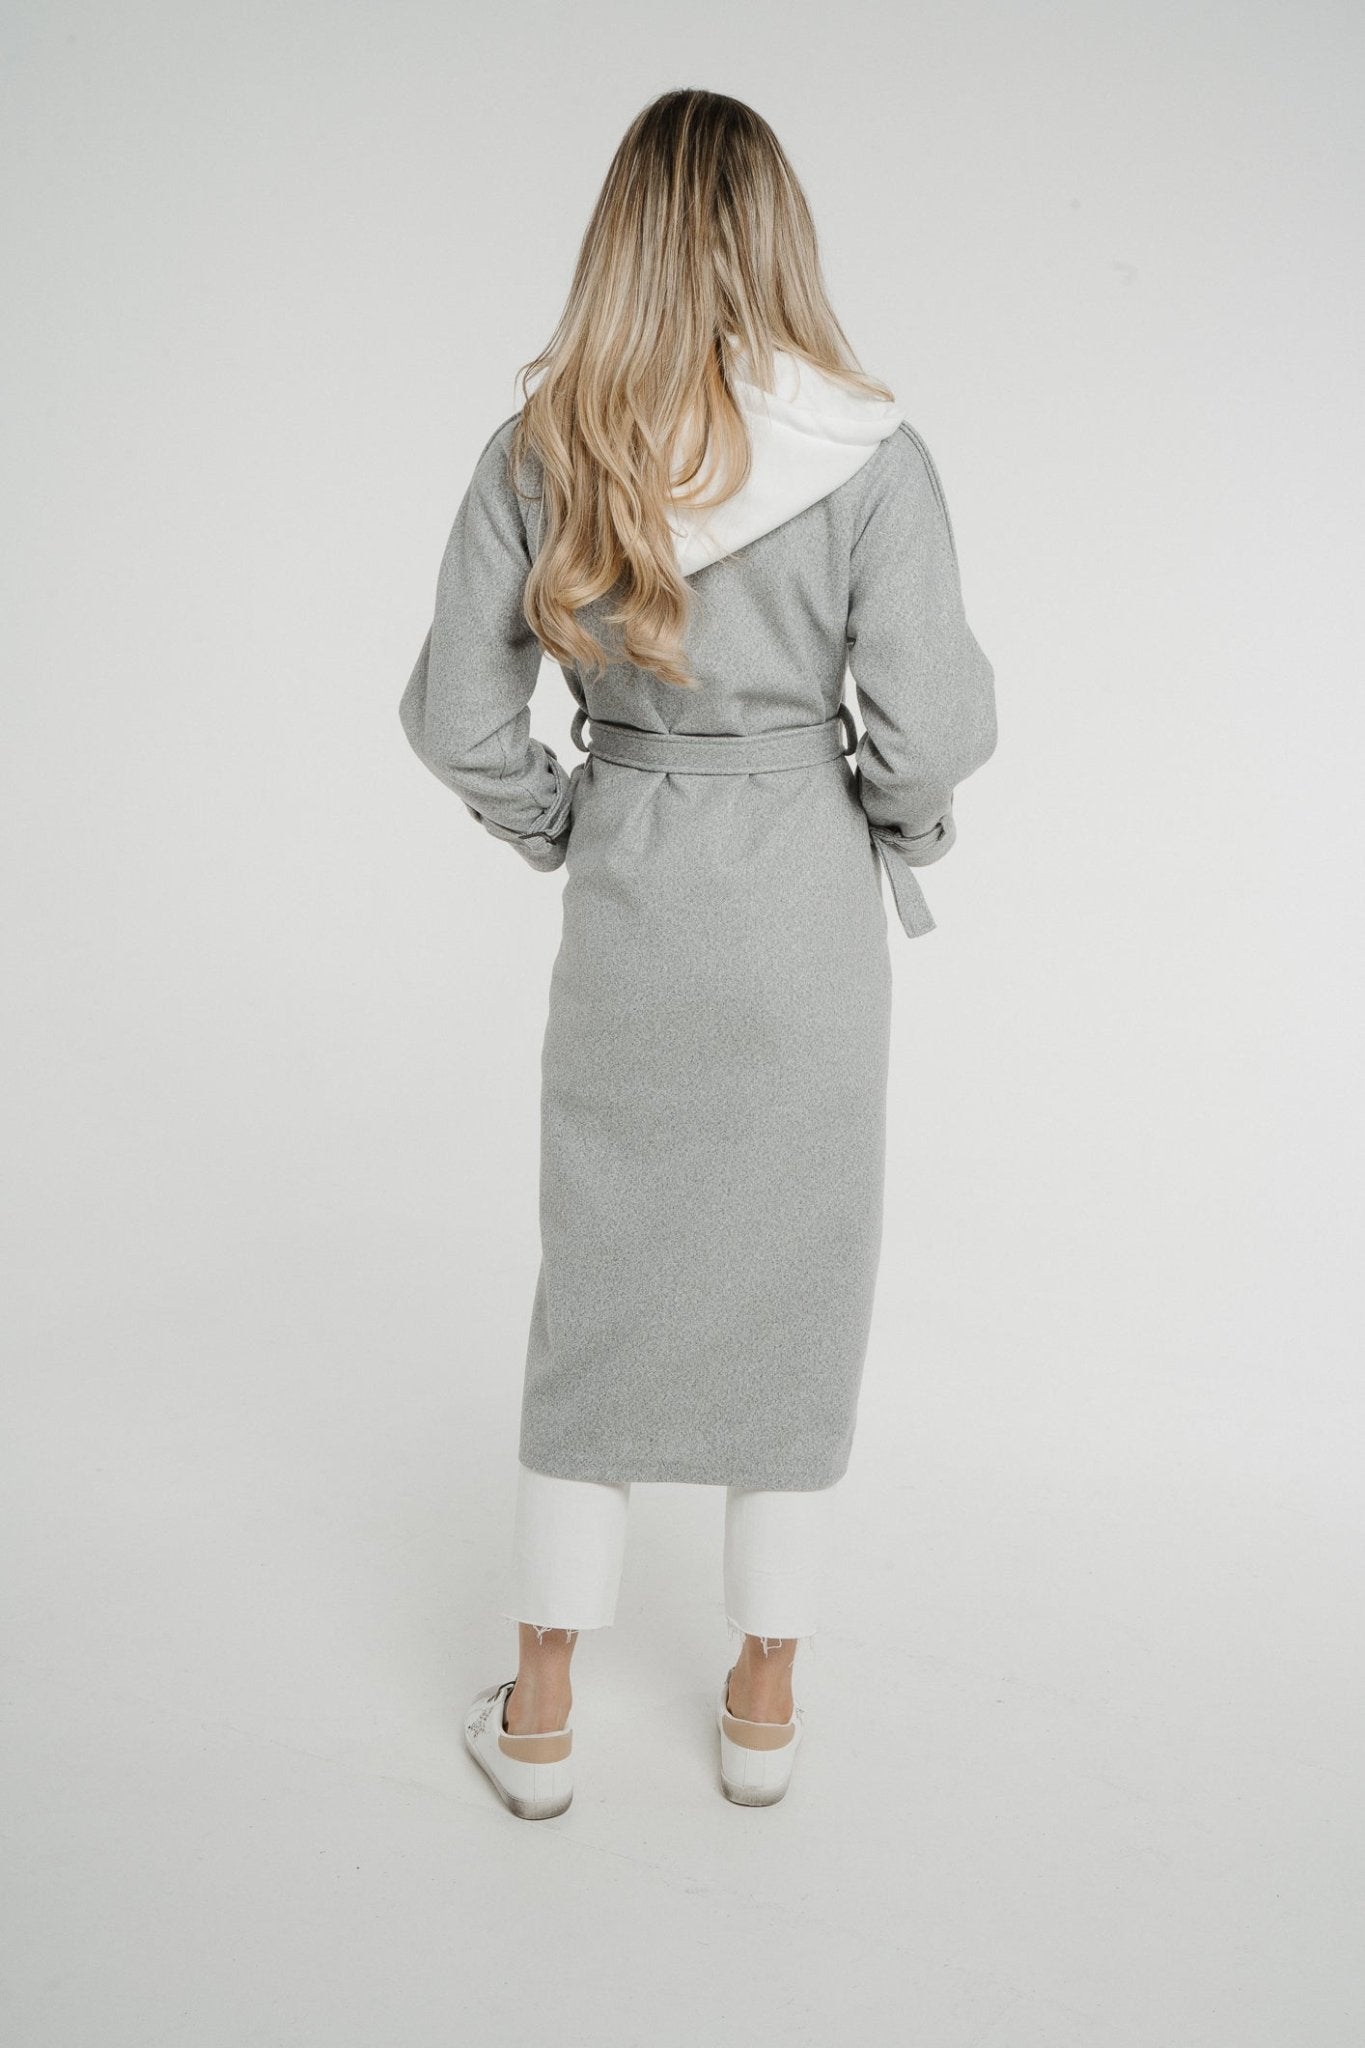 Kelly Layered Hooded Coat In Grey - The Walk in Wardrobe